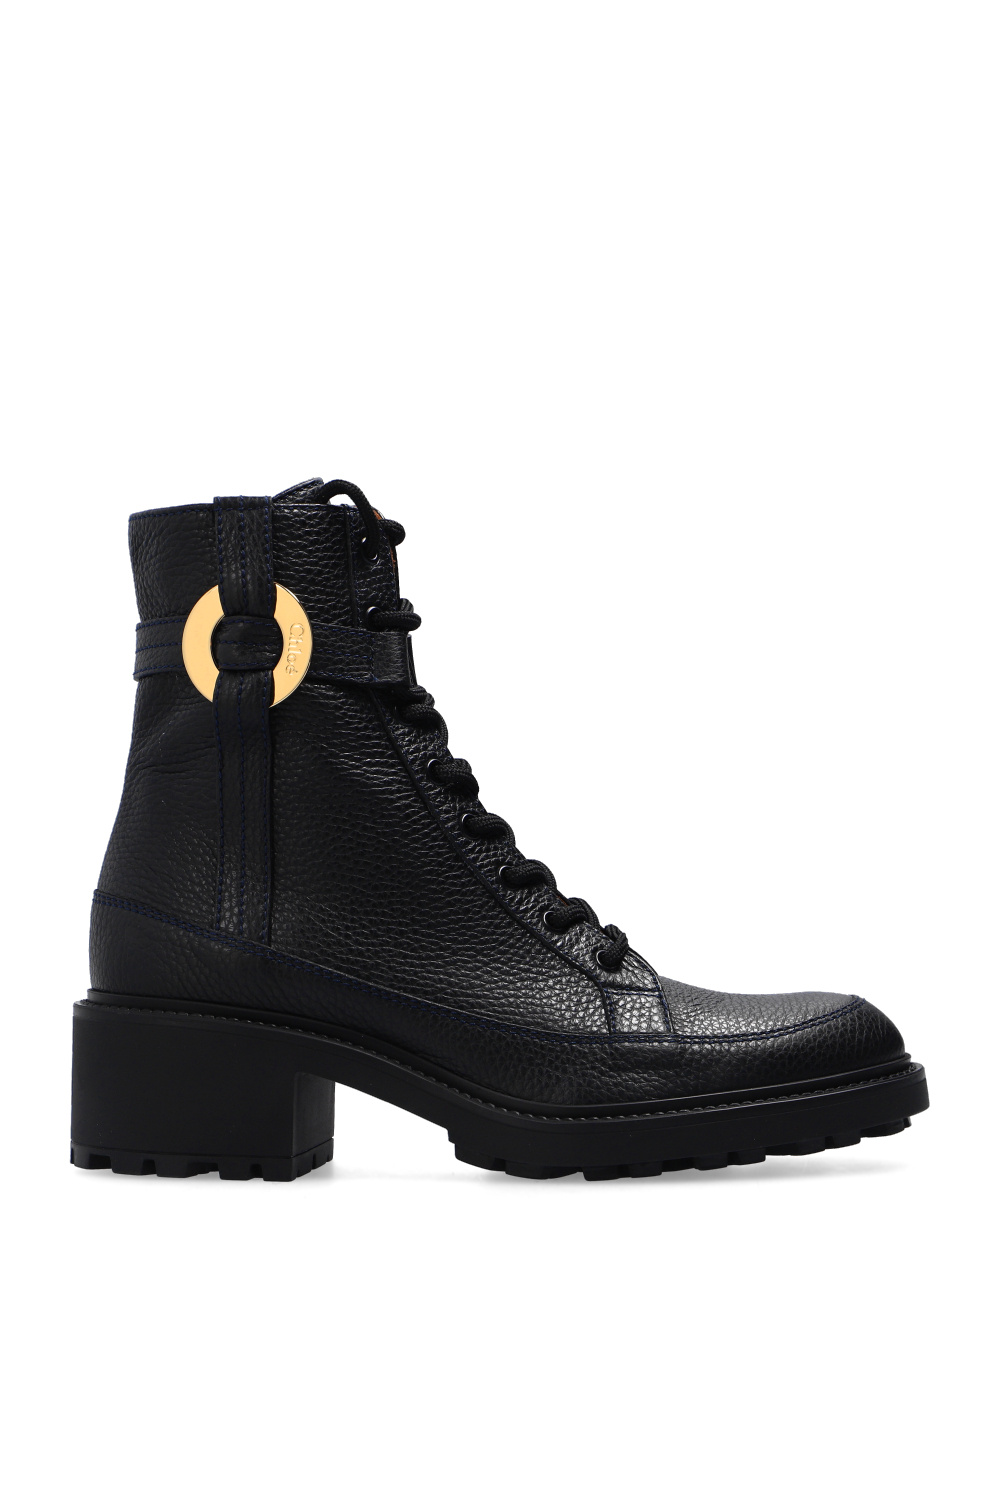 Chloé ‘Darryl’ heeled ankle boots